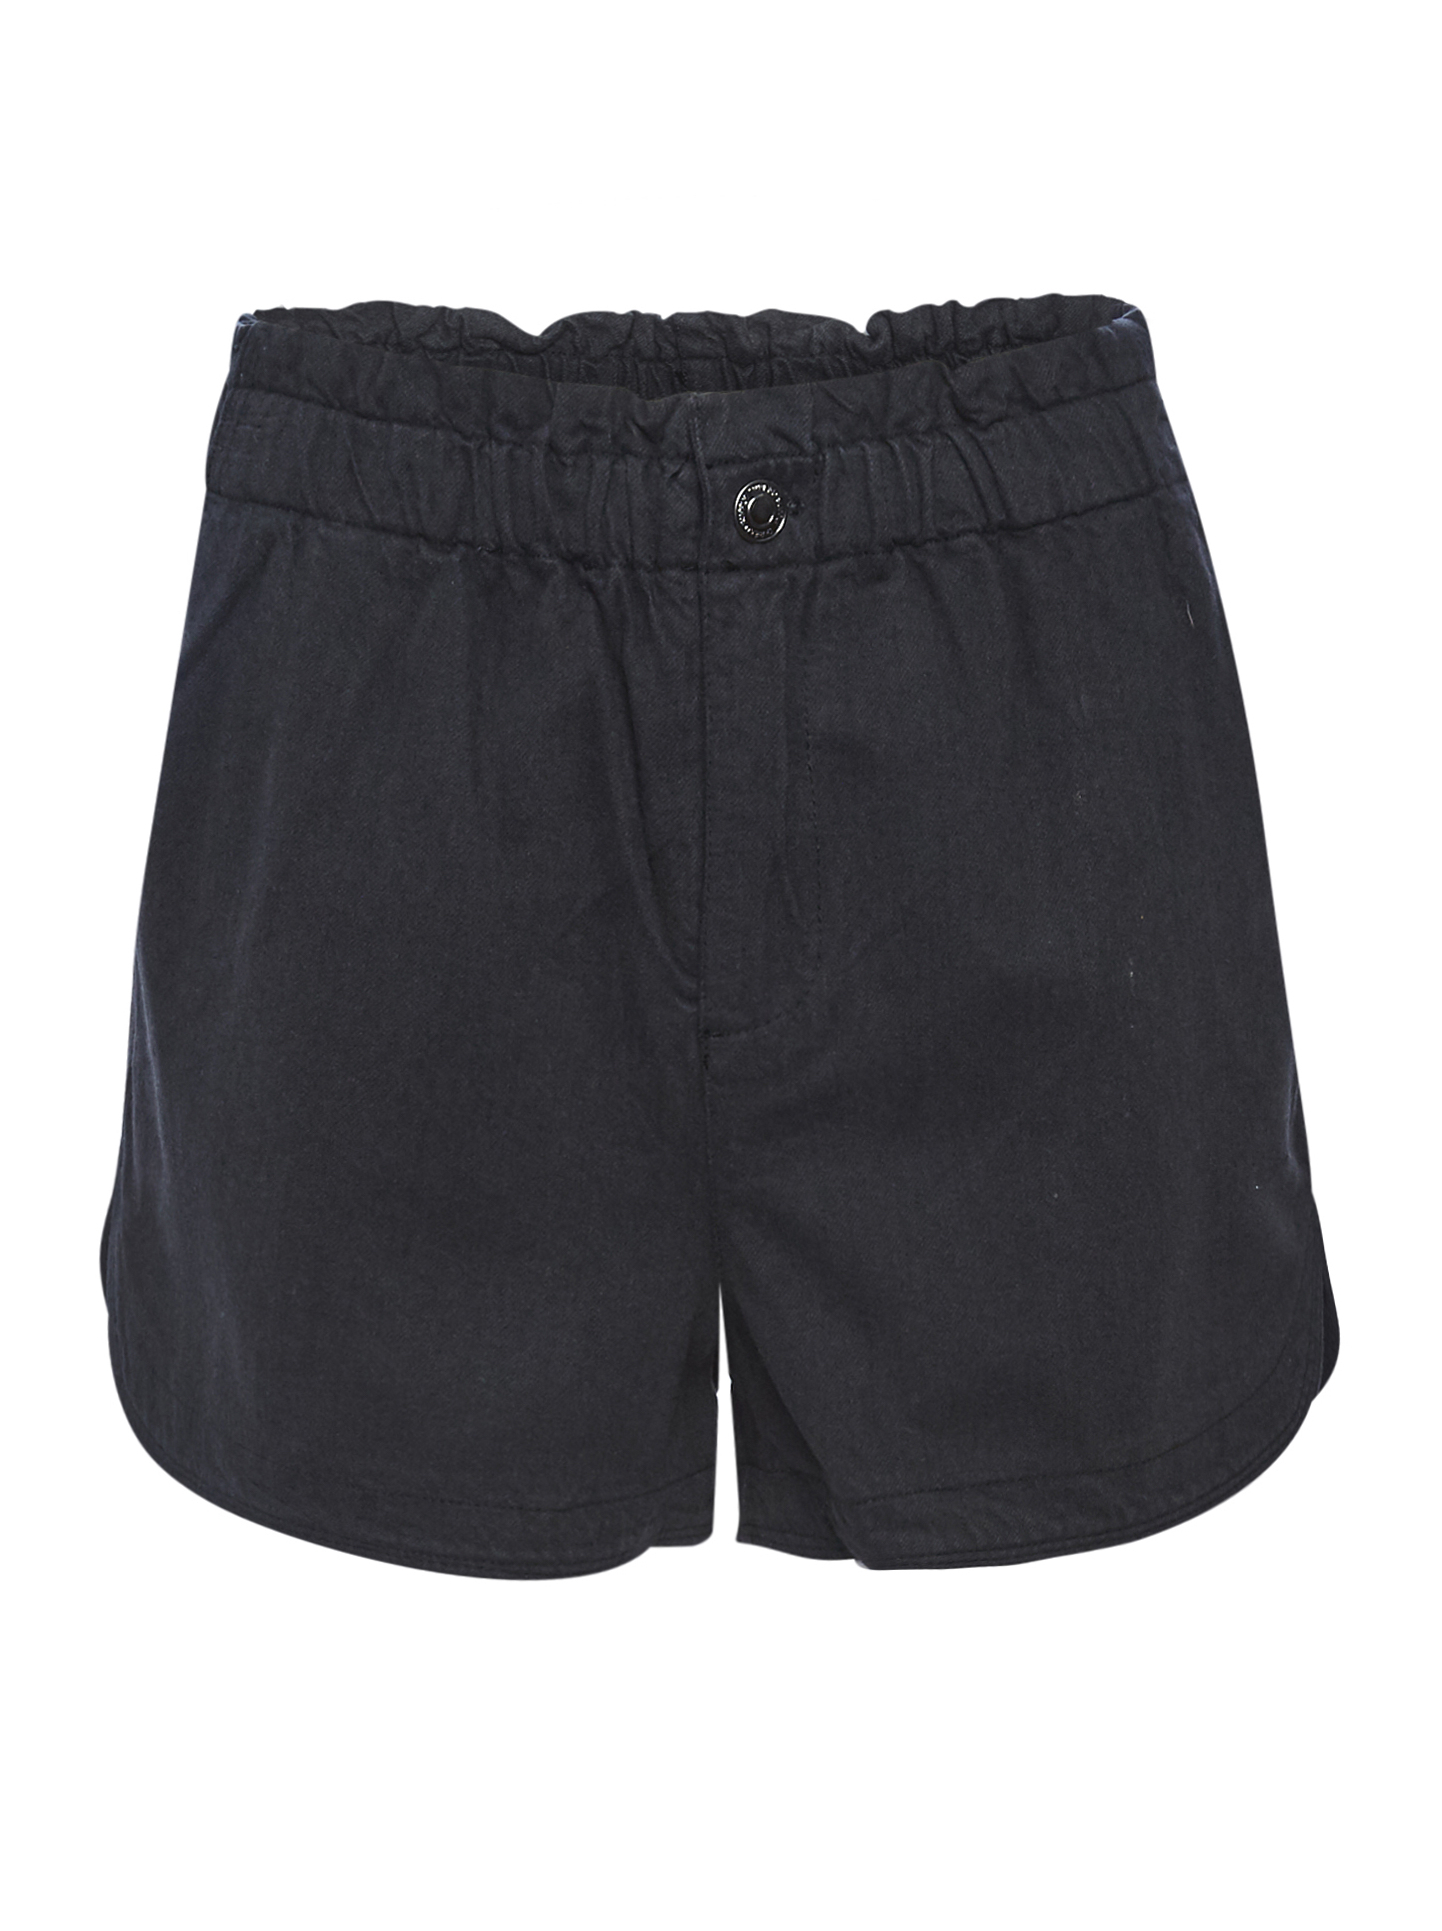 Thread & Supply Elastic Waistband Shorts in Black XS - L | DAILYLOOK